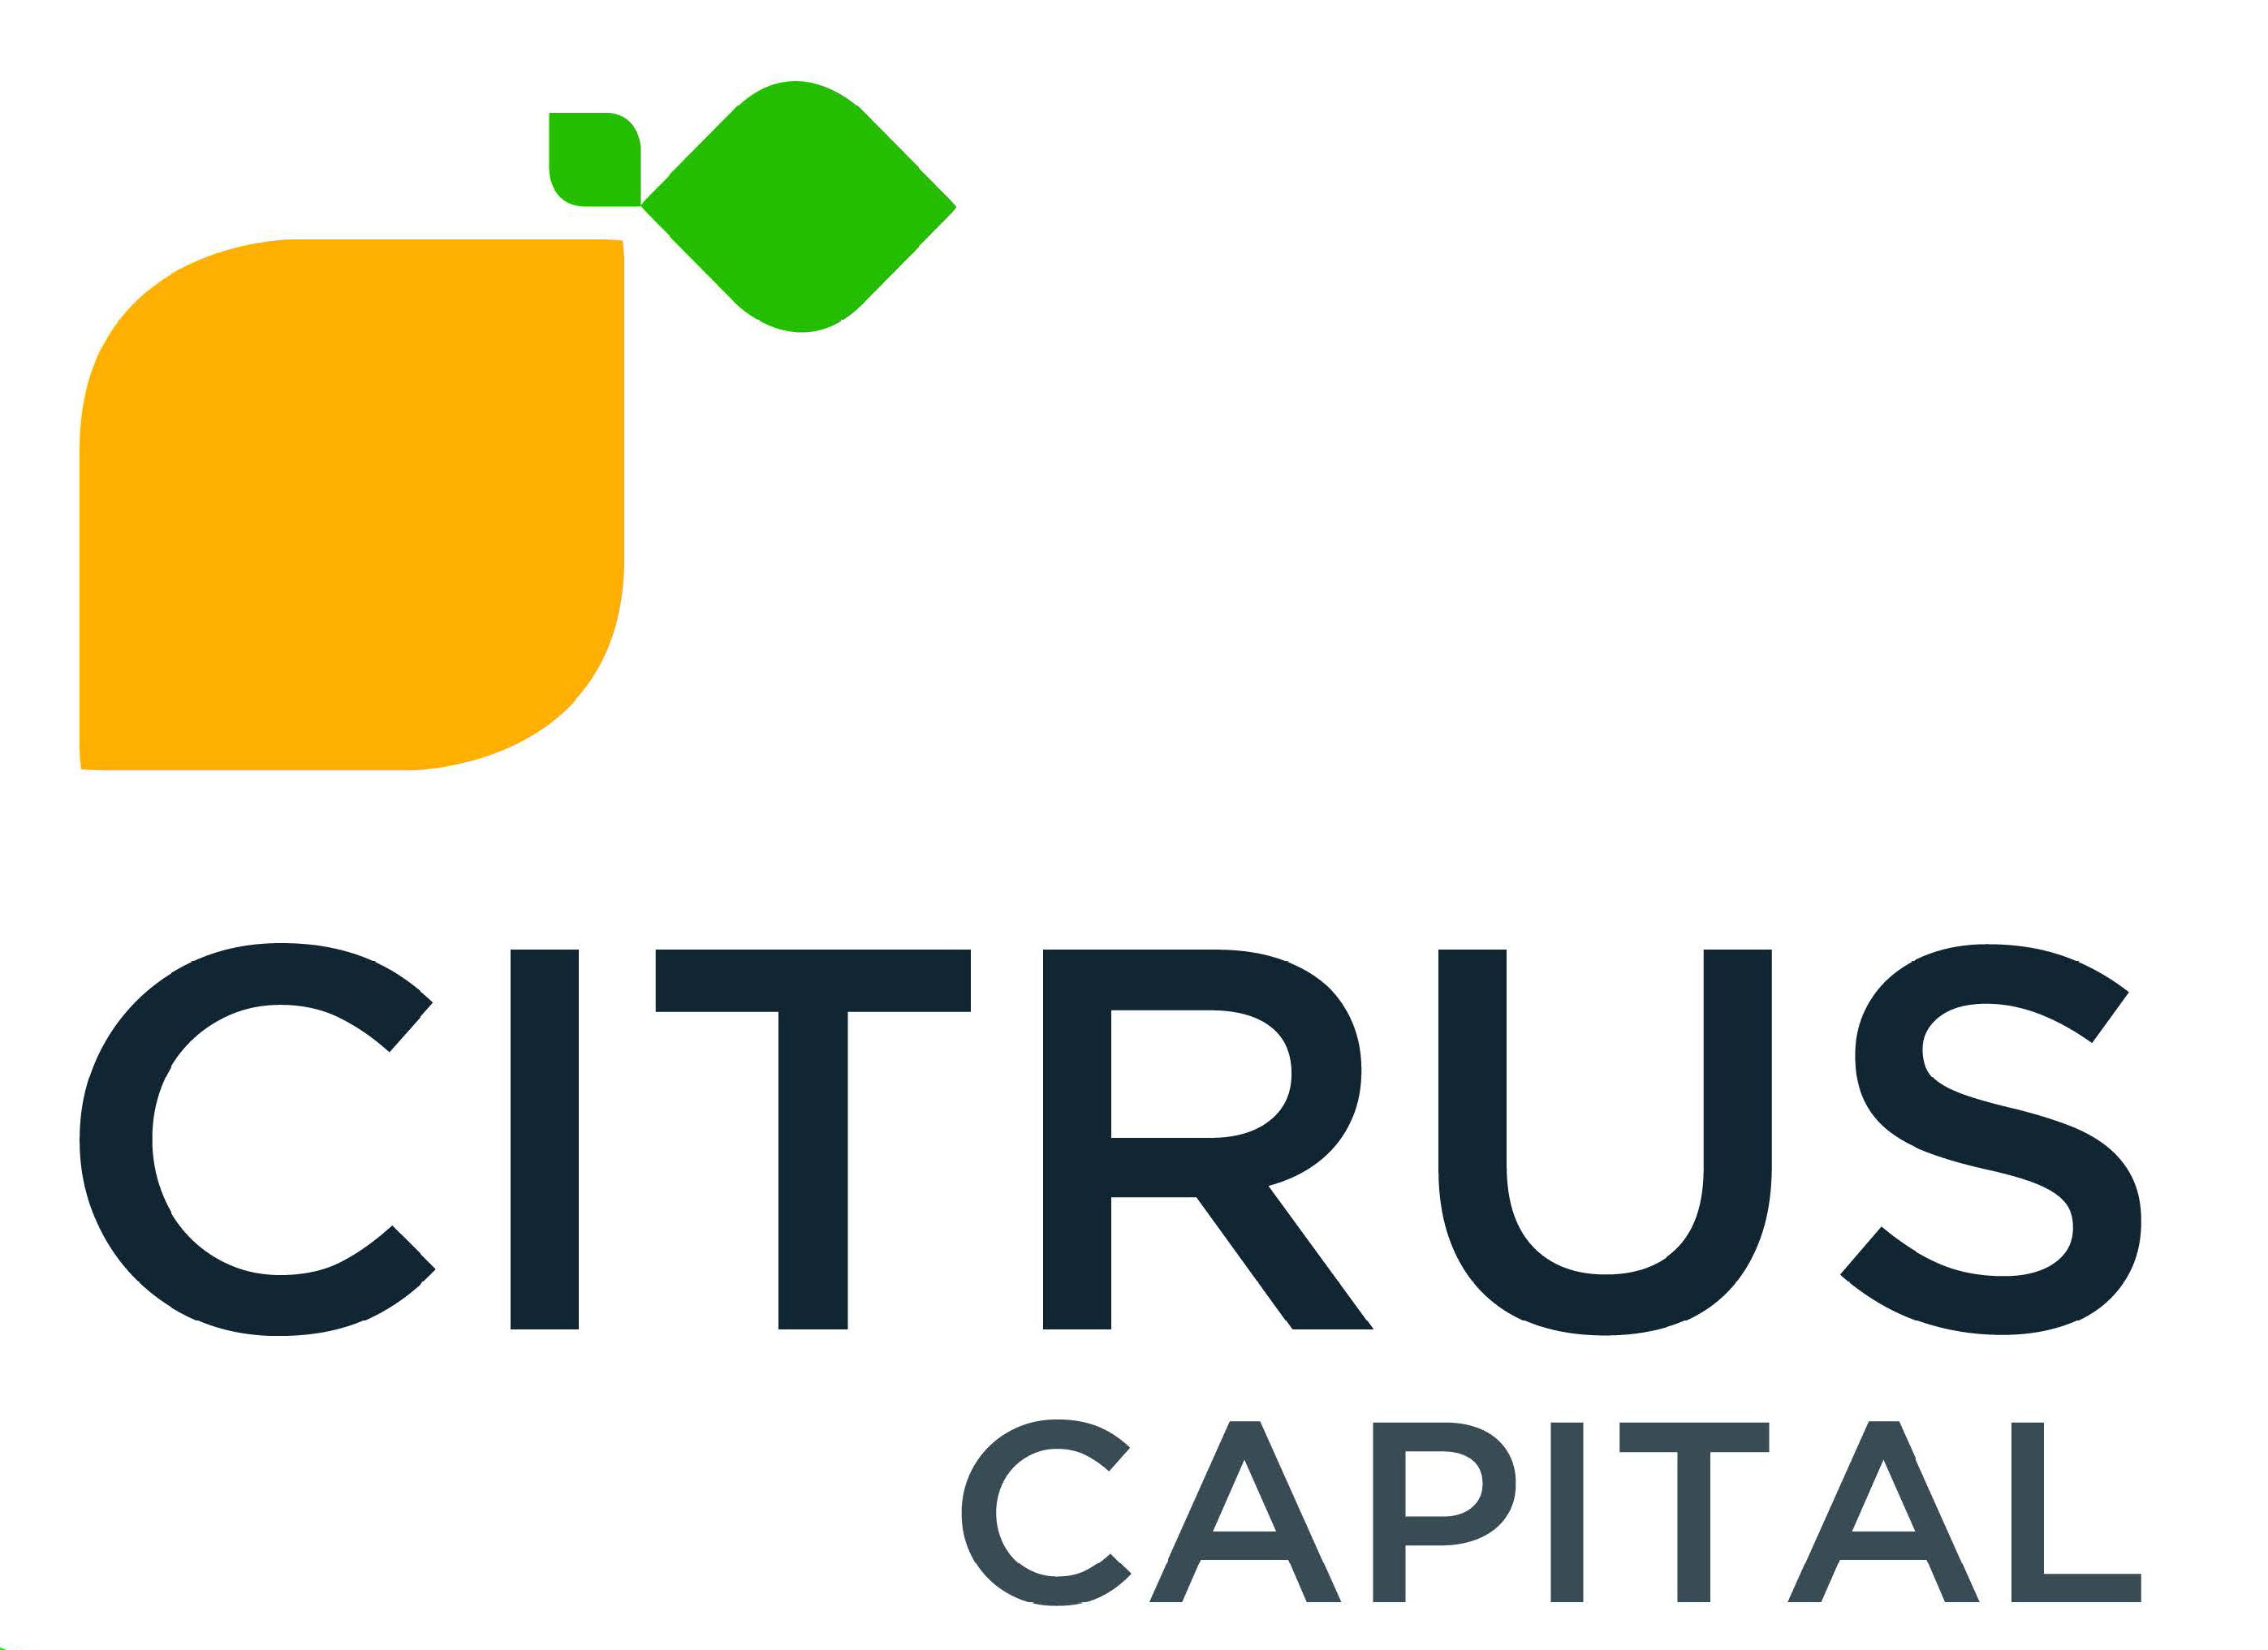 Citrus Capital